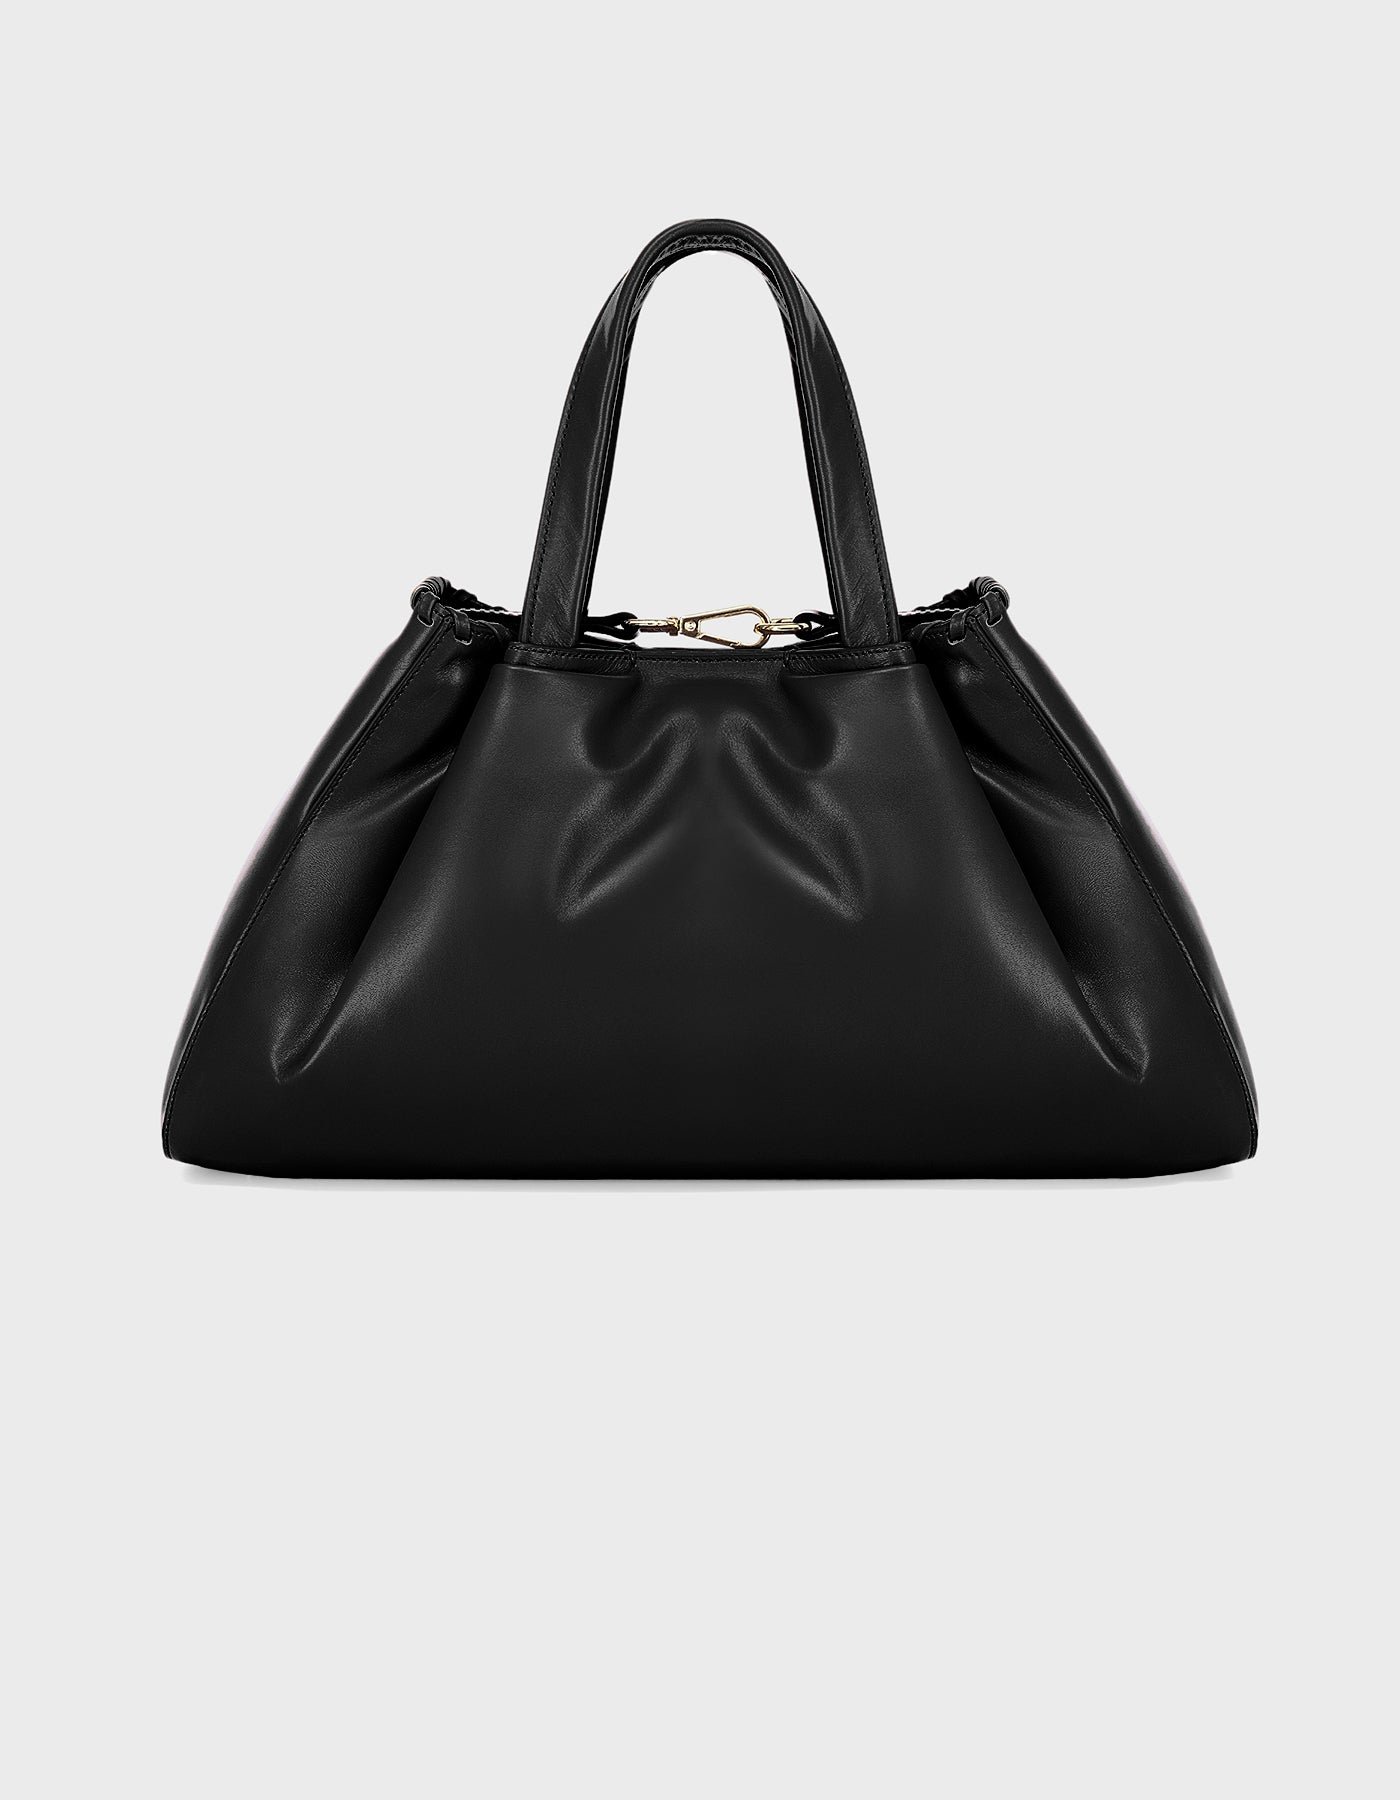 Hiva Atelier | Nubi Pedded Shoulder Bag Black | Beautiful and Versatile Leather Accessories